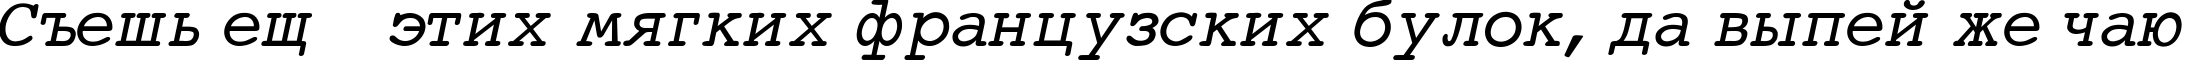 Пример написания шрифтом Courier-Normal-Italic текста на русском